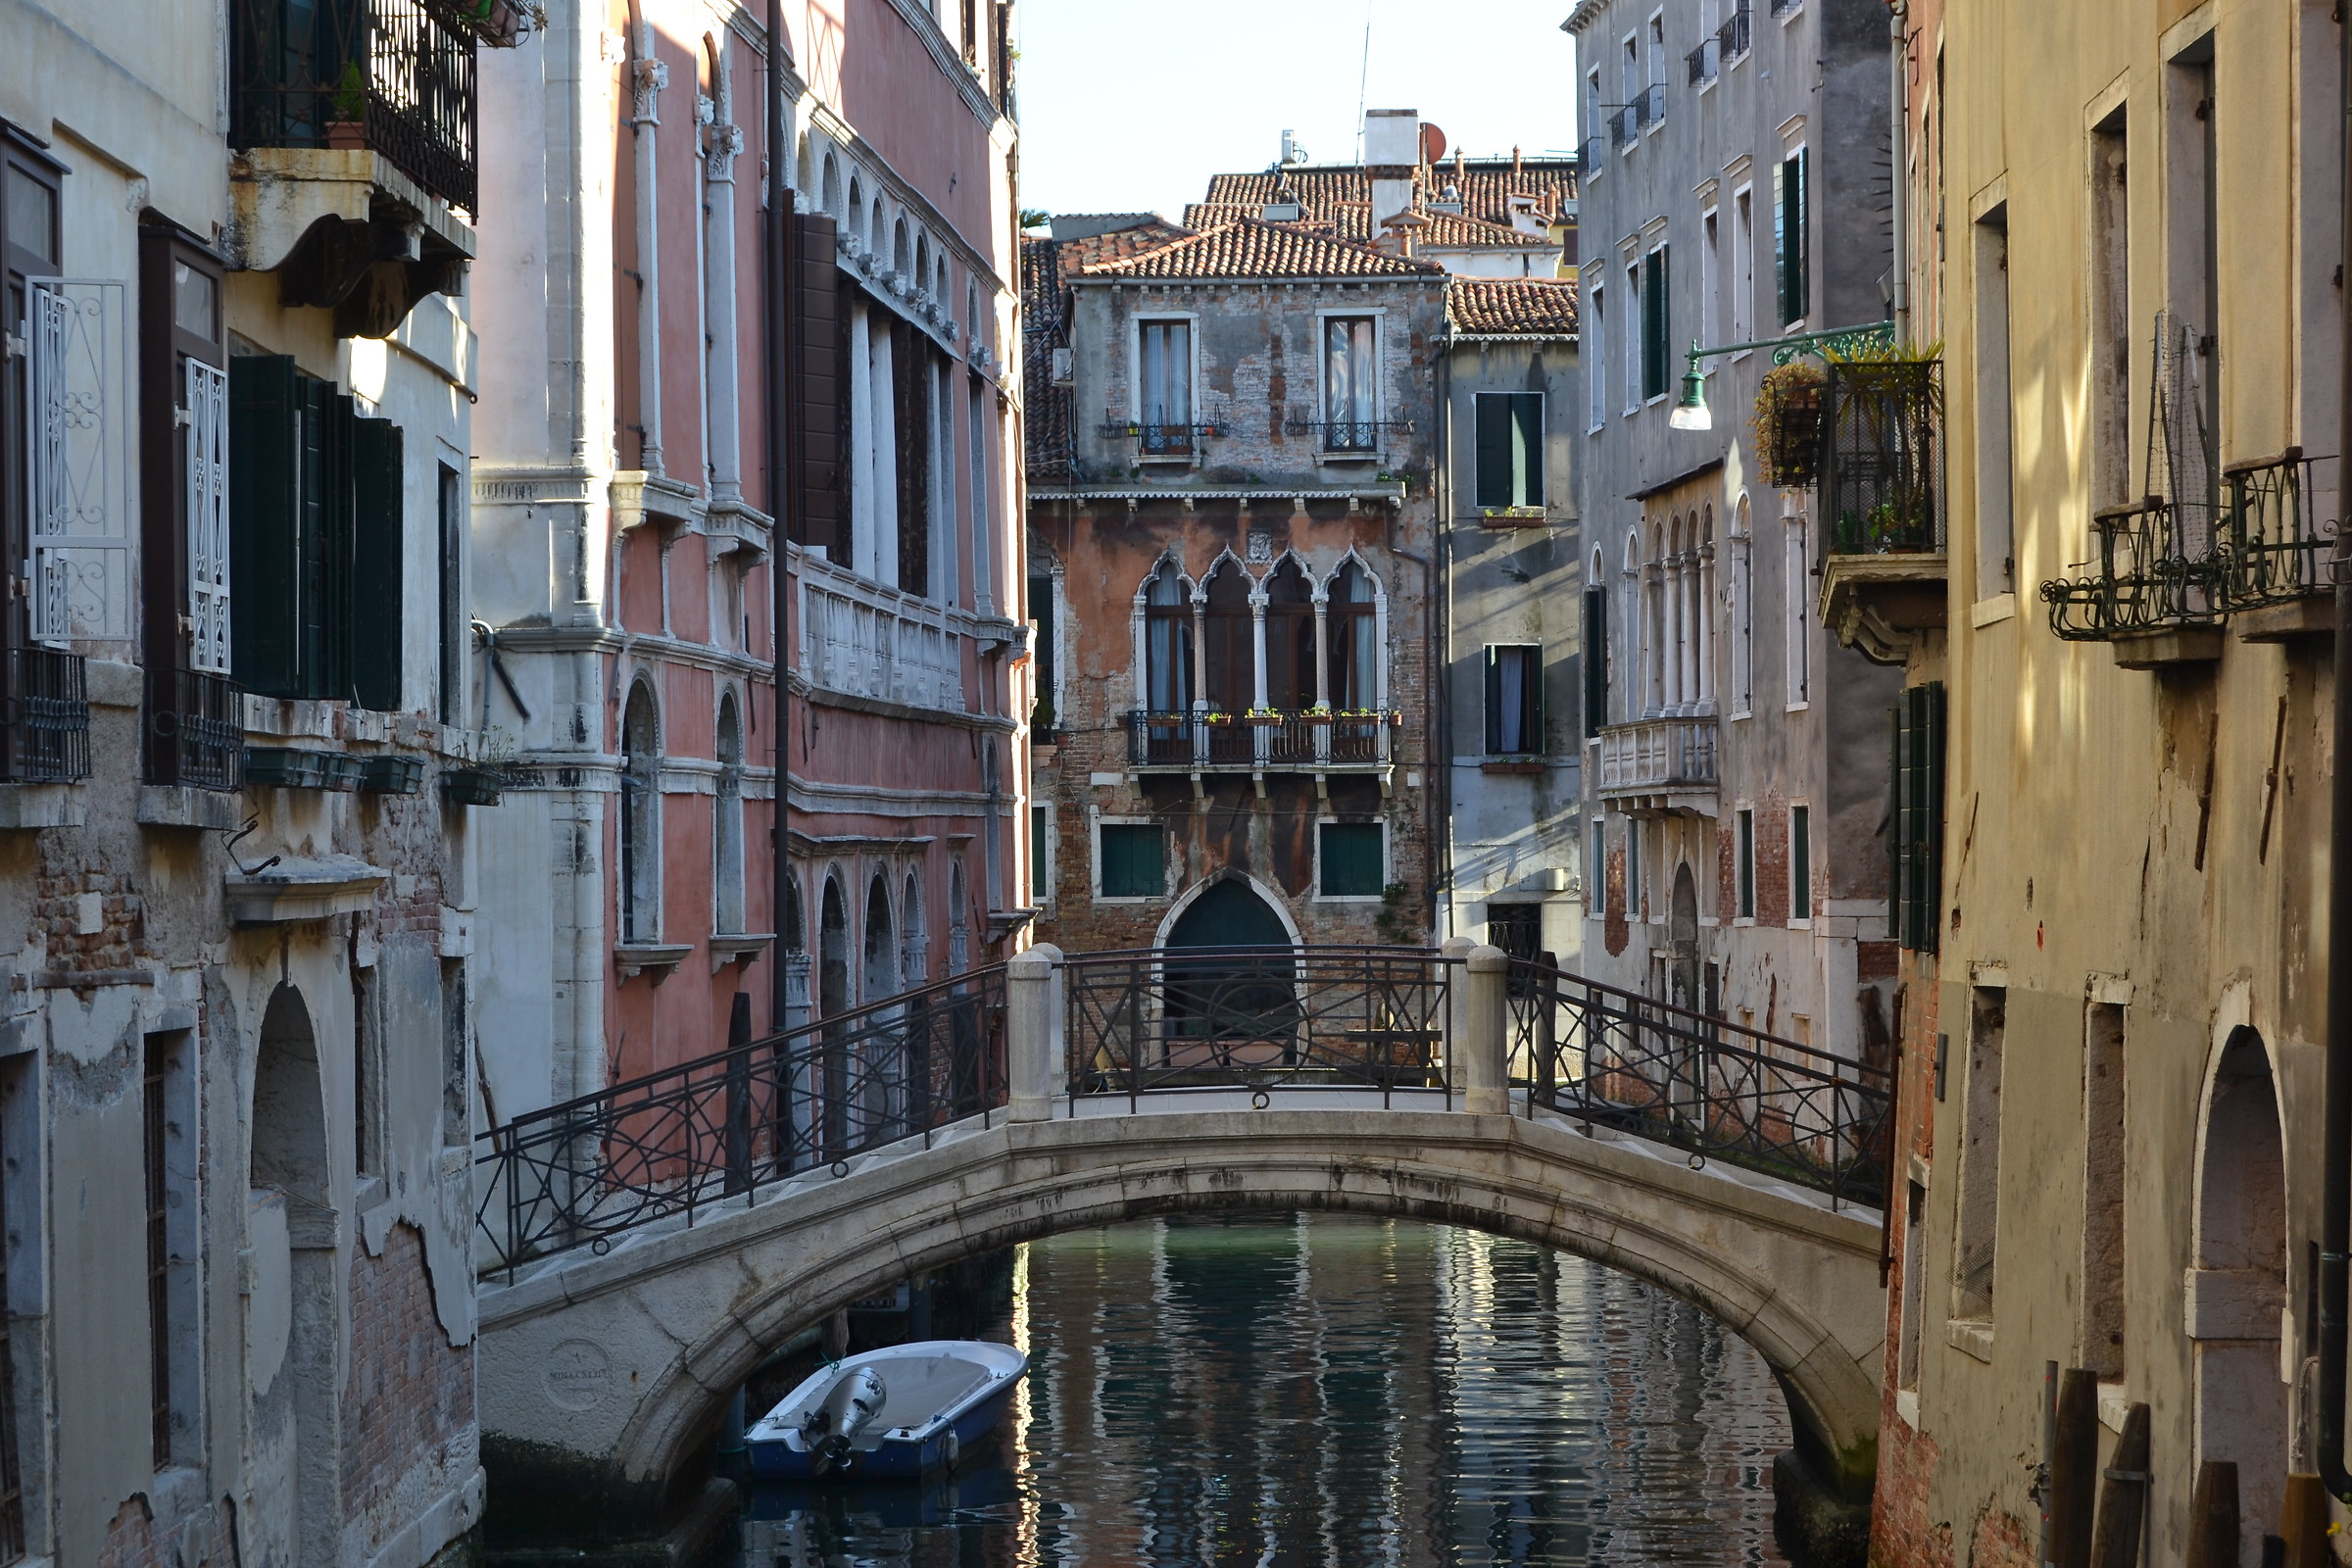 Su e zo par i ponti (Venezia)...